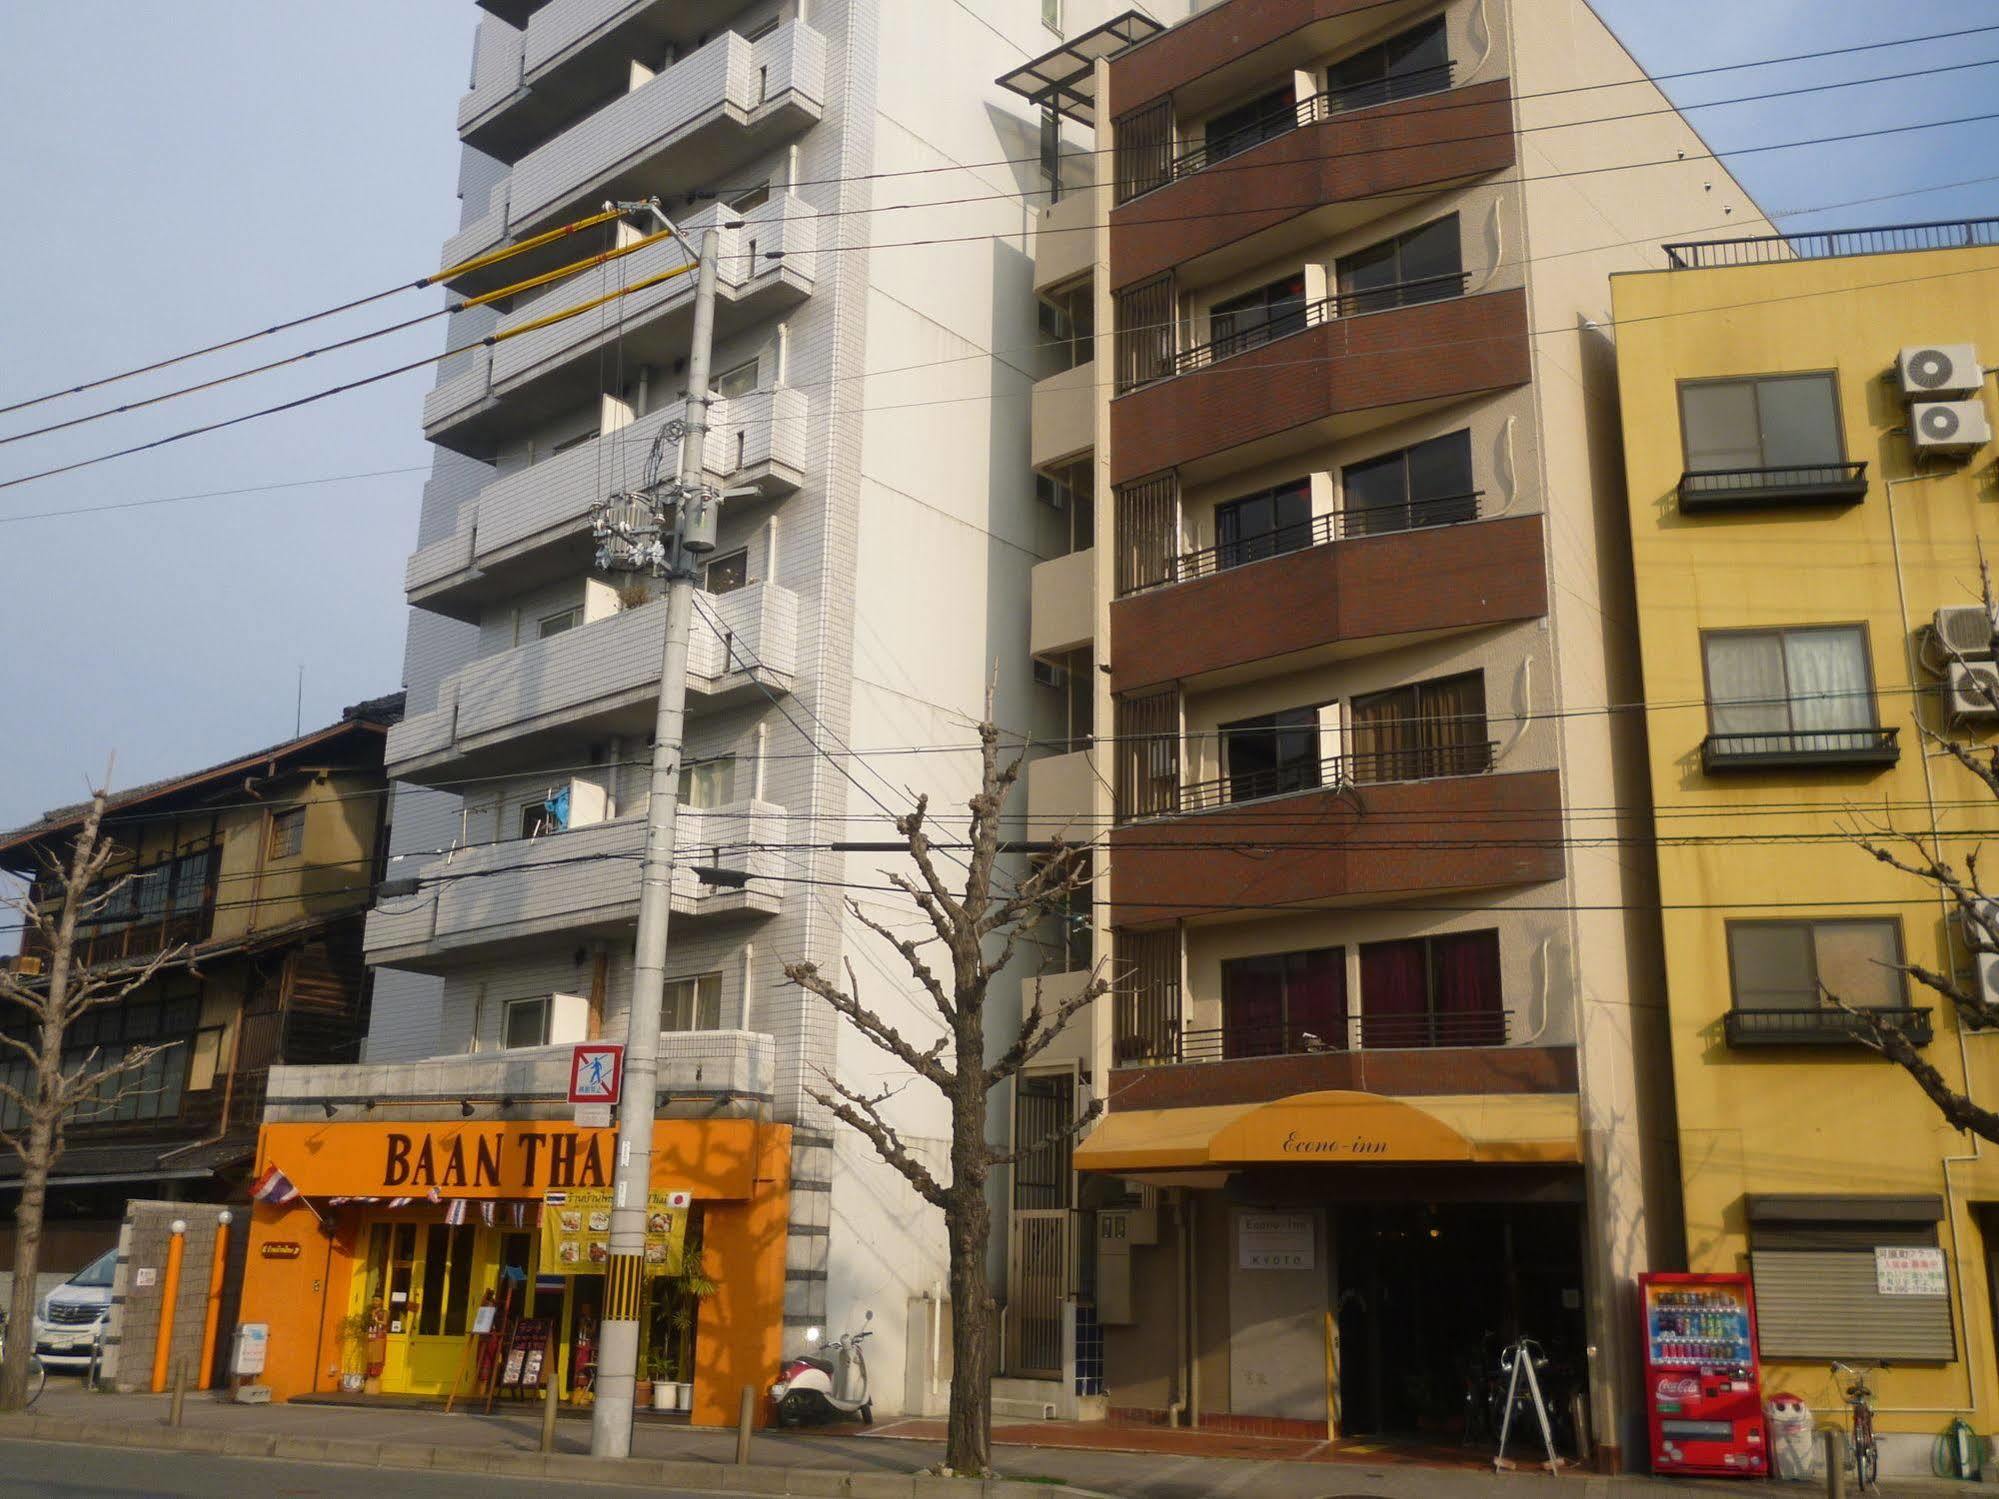 Econo-Inn Kyōto Exterior foto